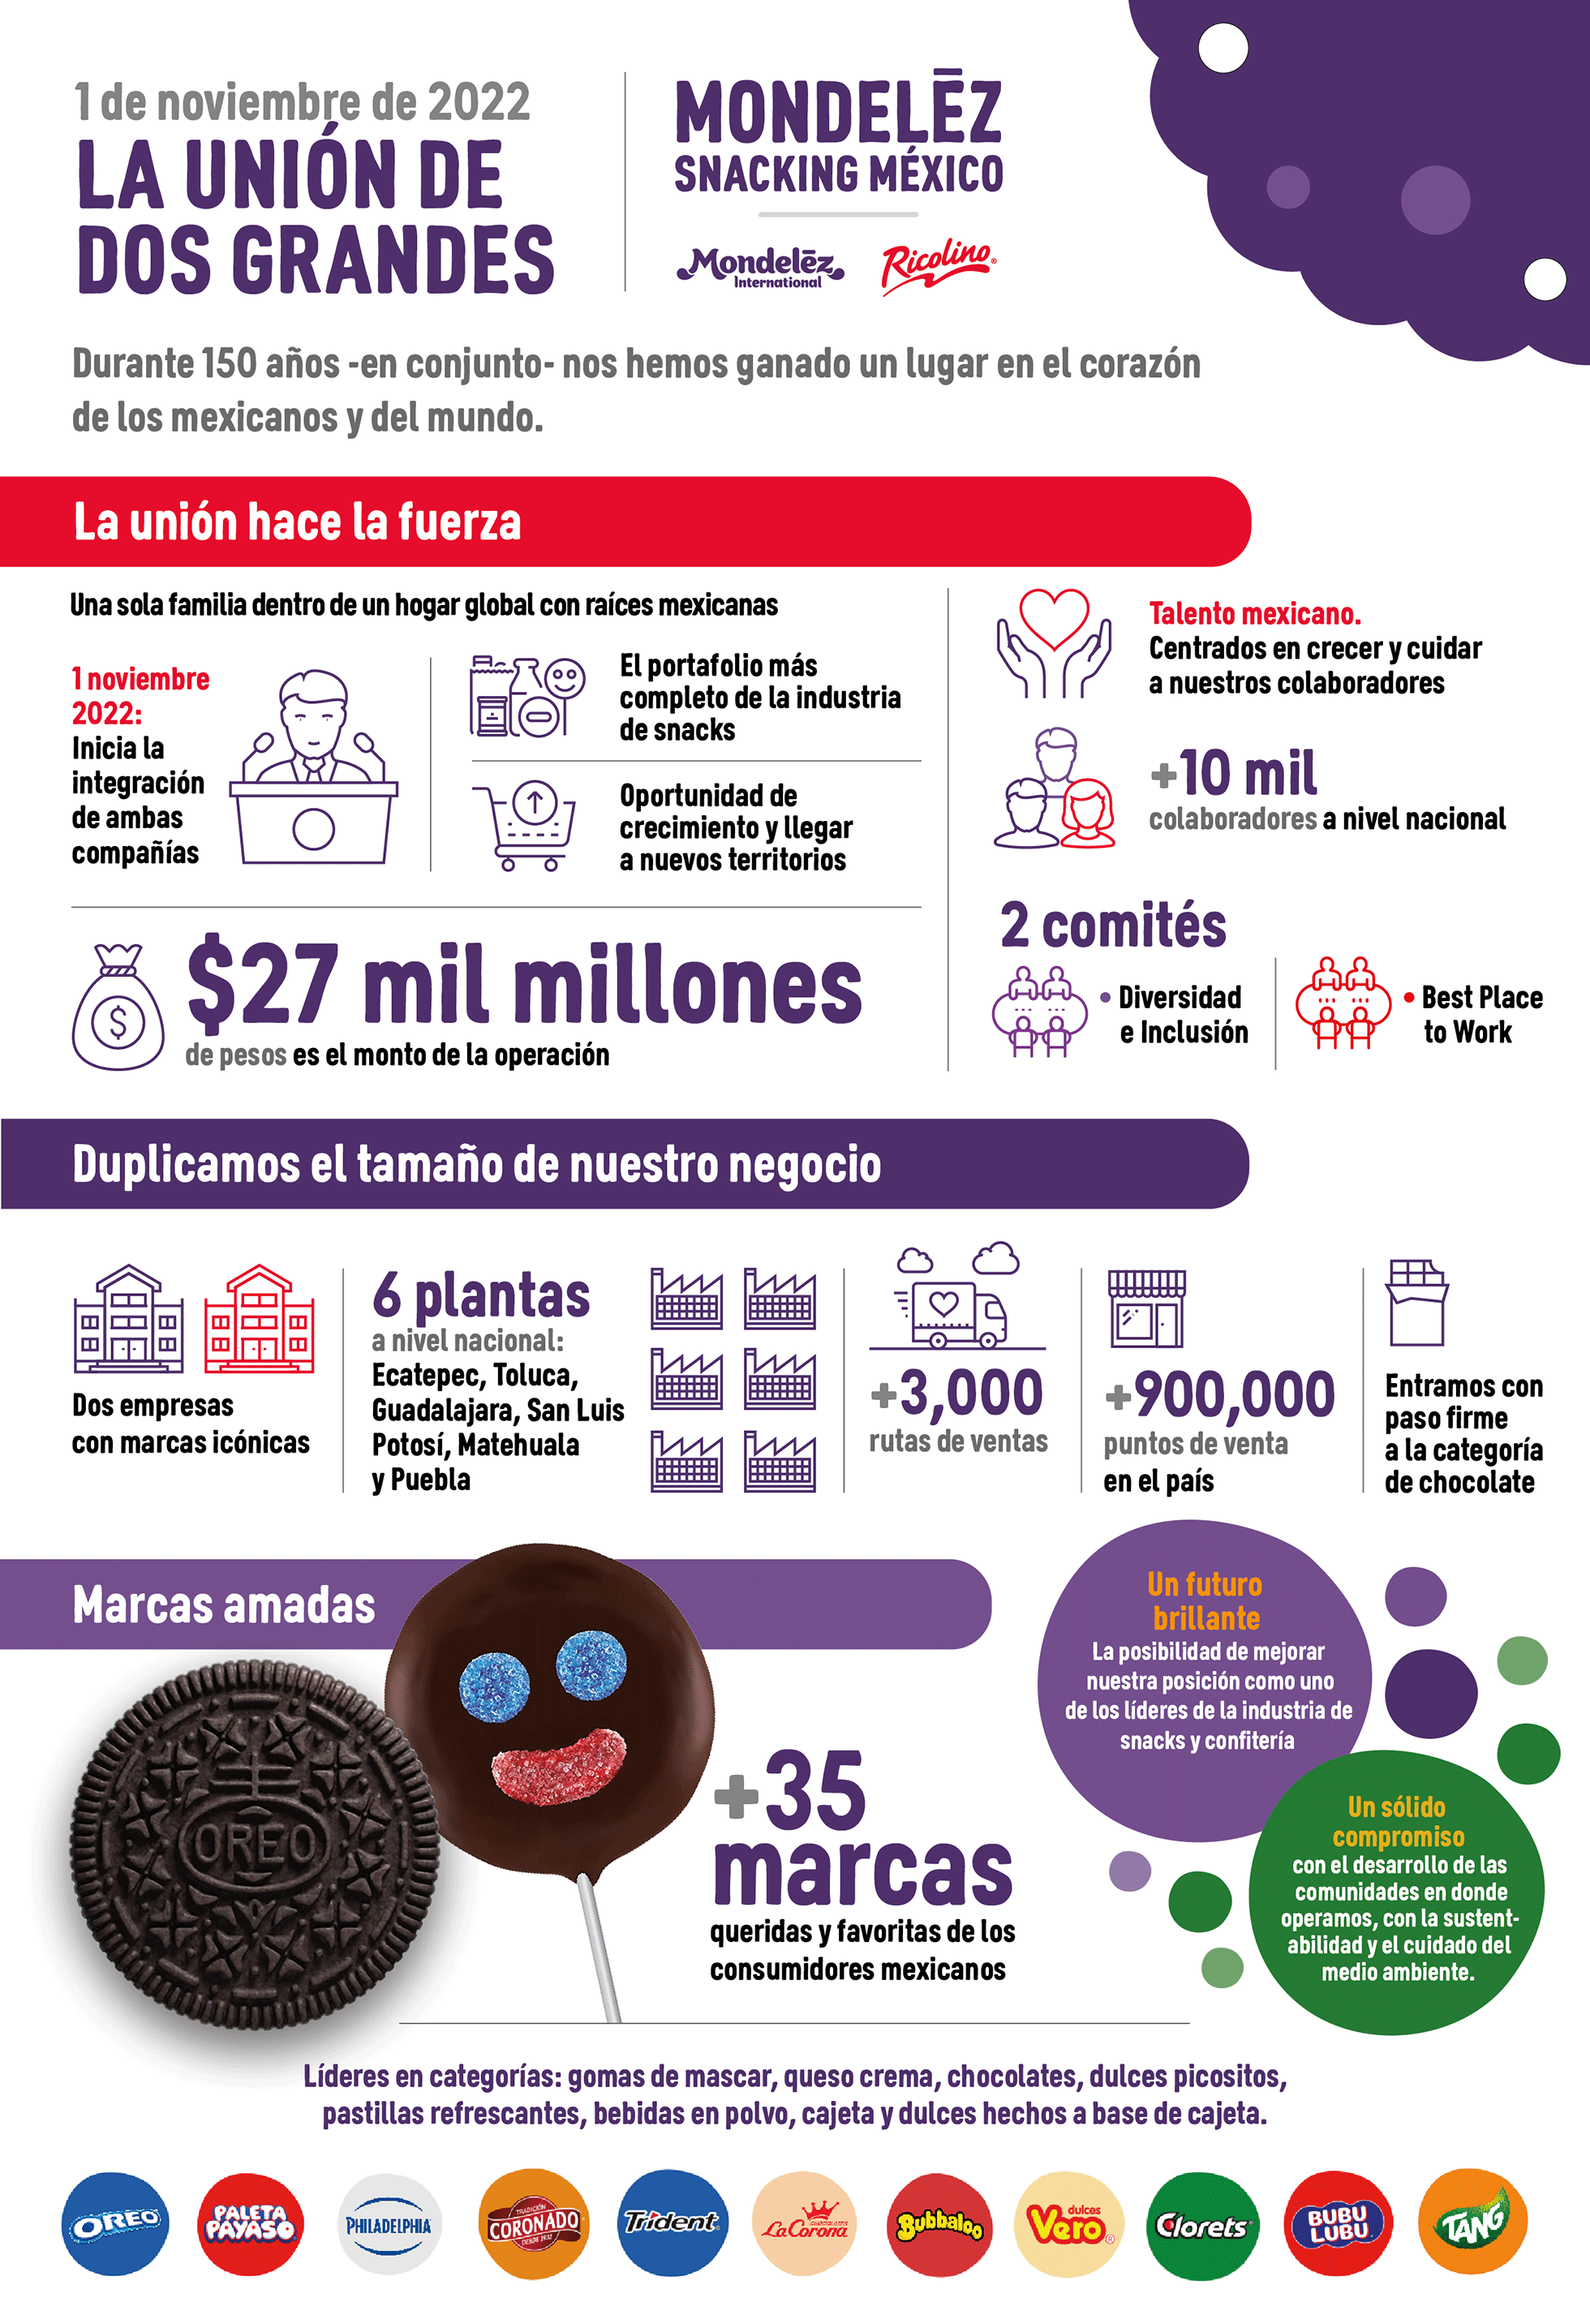 MDLZ Mexico y Ricolino infographic